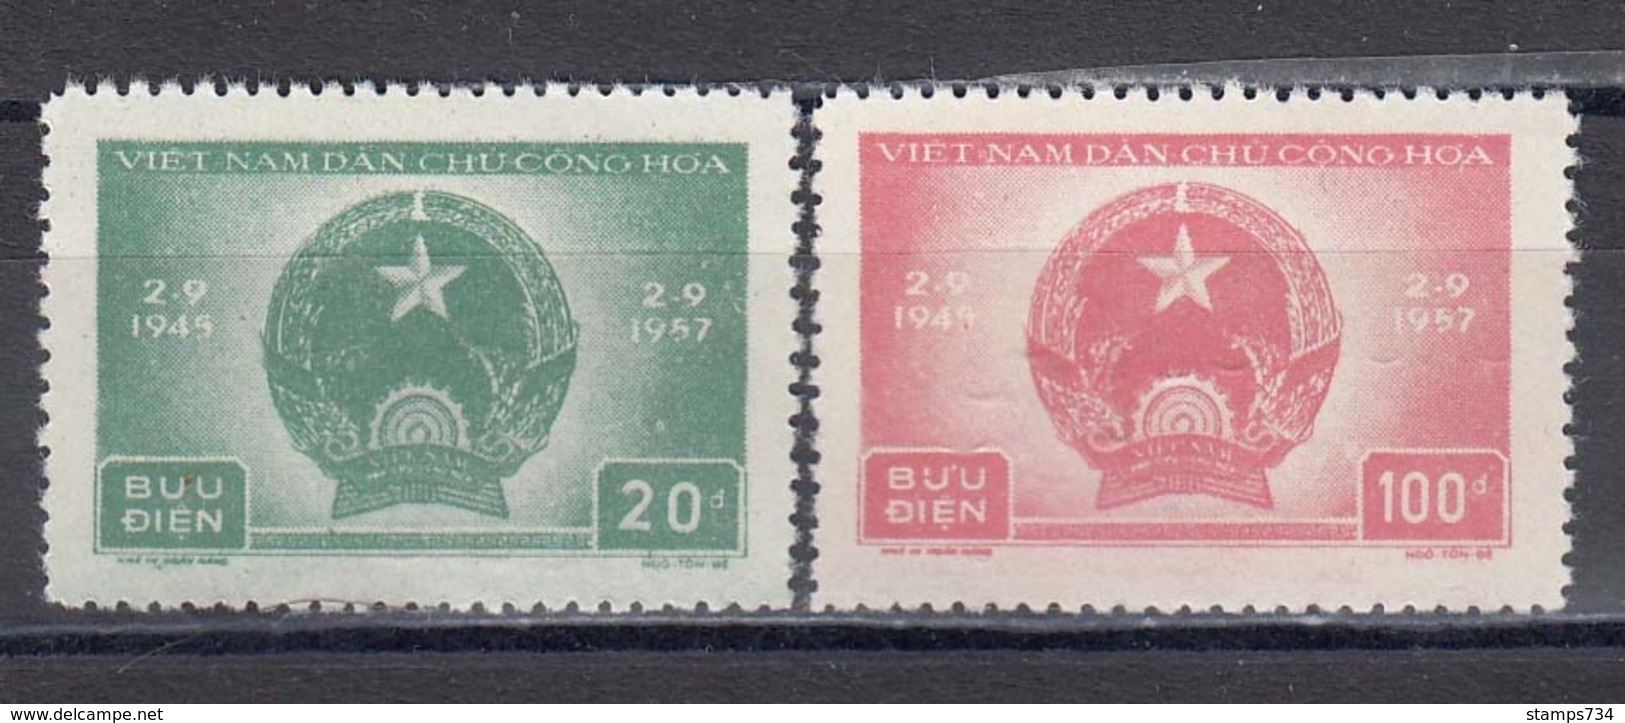 Vietnam Nord 1957 - 12 Years Republic, Mi-Nr. 61/62, MNH** - Vietnam